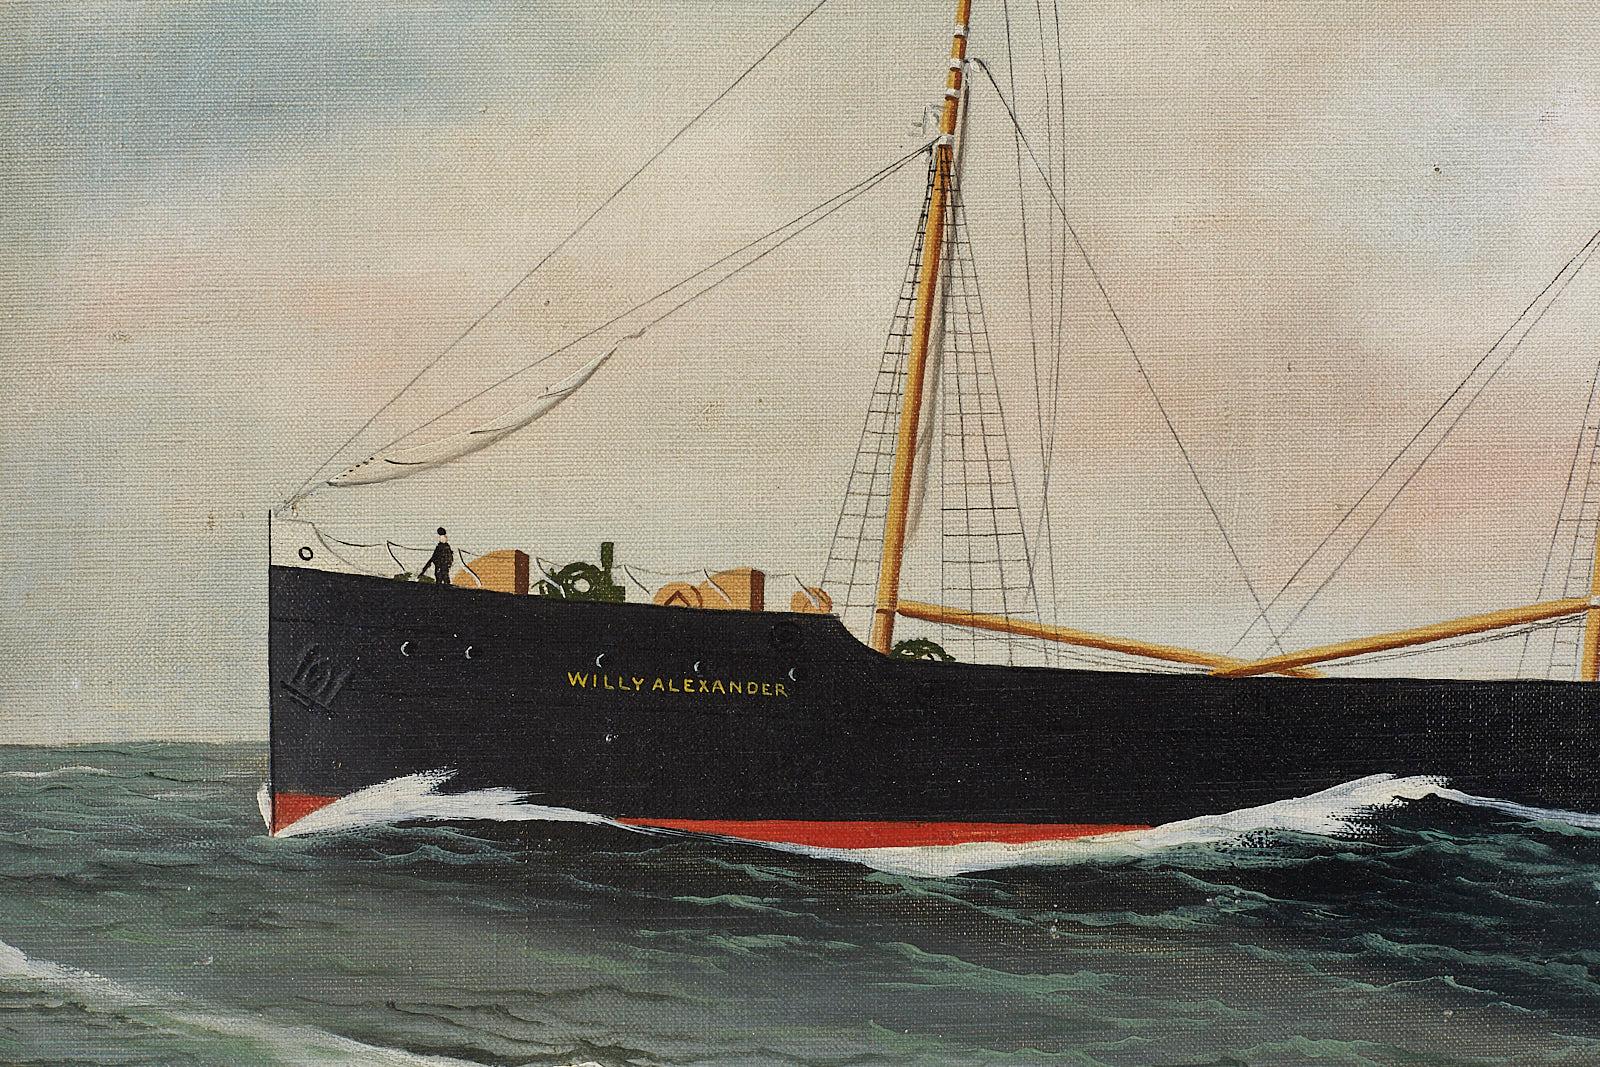 20th Century Steamship Willy Alexander by Alfred Jensen, 1909